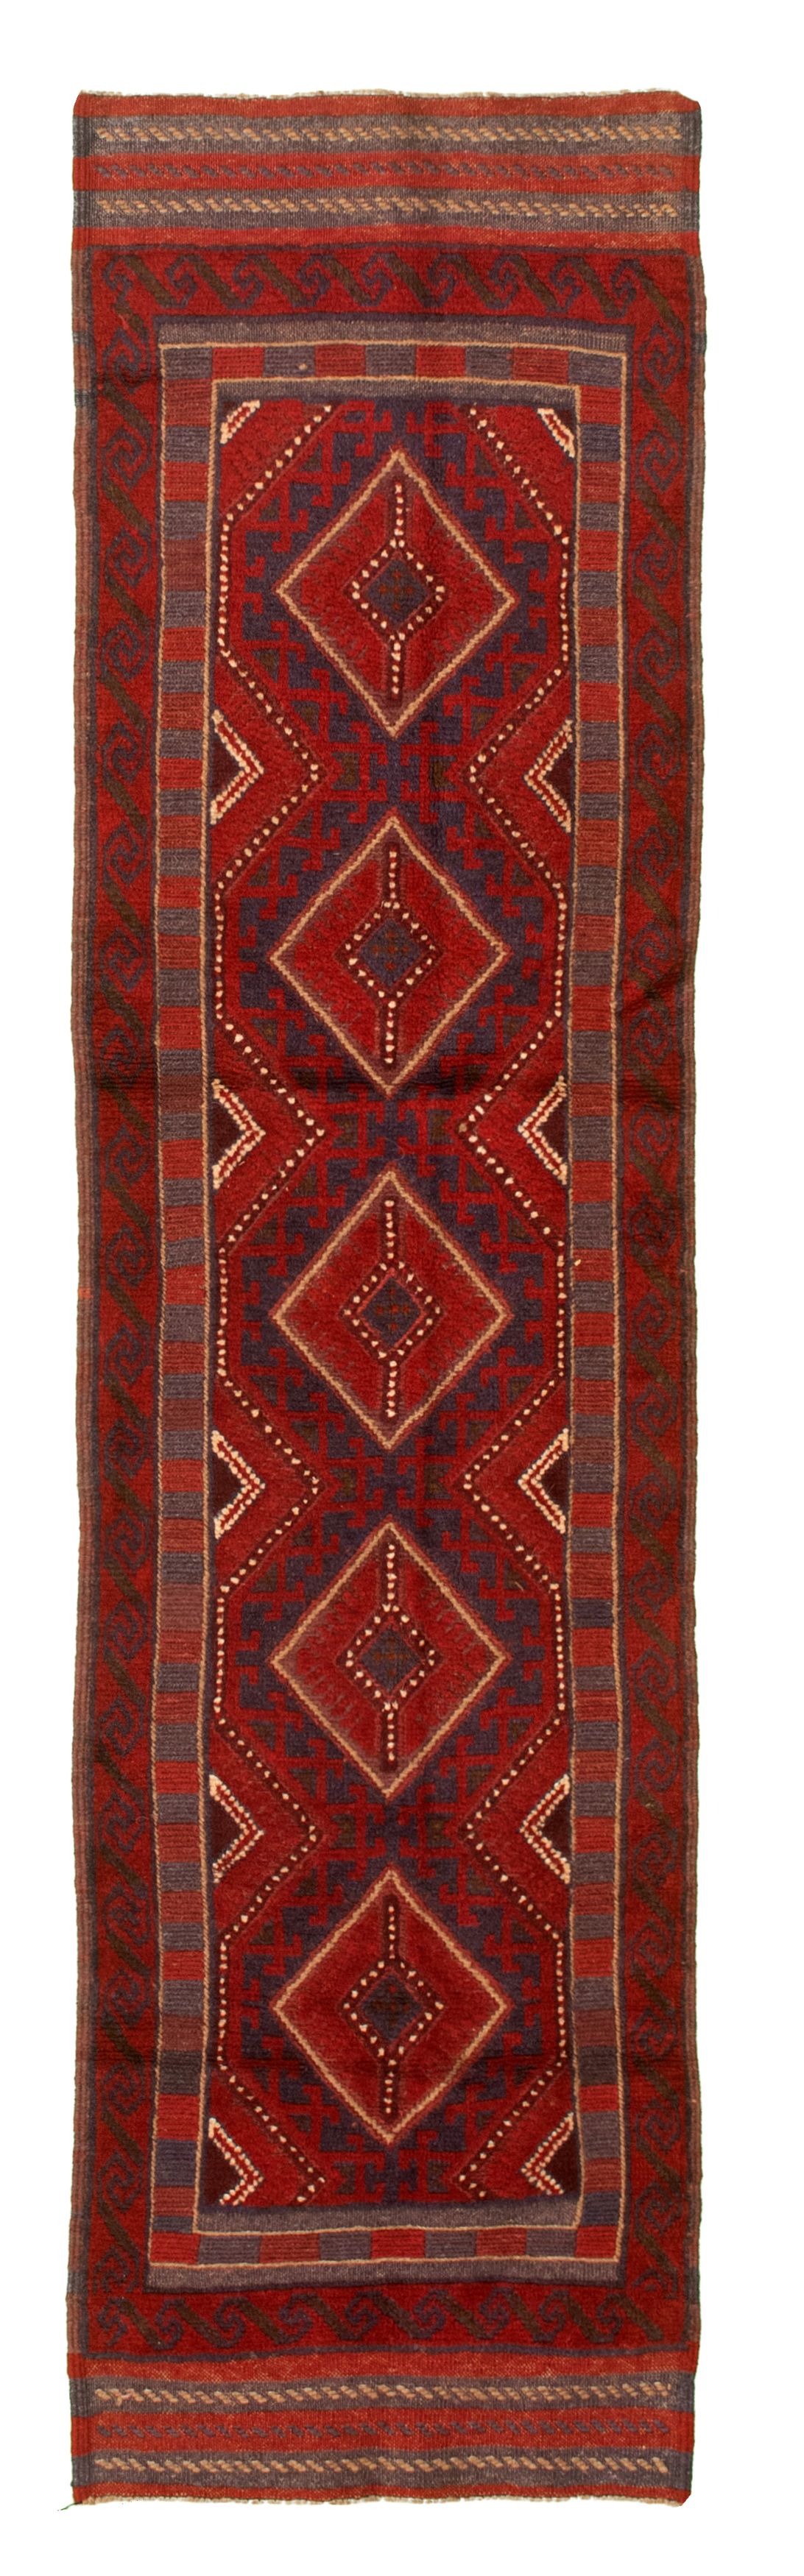 Hand-knotted Tajik Caucasian Red Wool Rug 2'1" x 8'6"  Size: 2'1" x 8'6"  